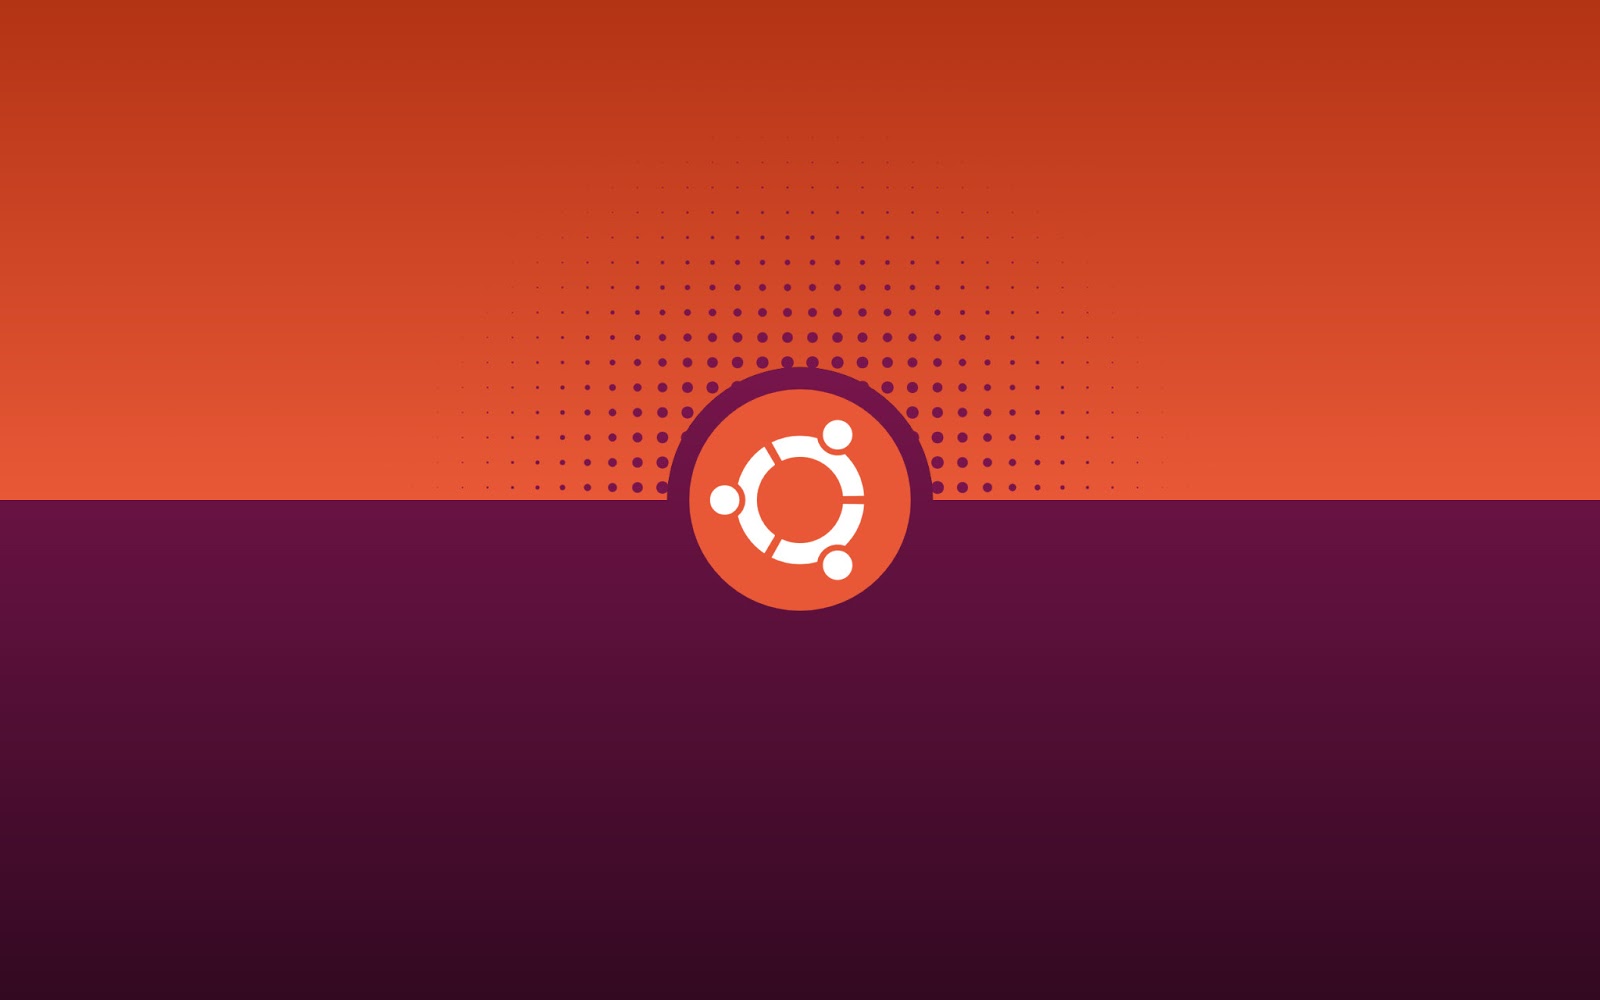 Ubuntu Hd Wallpapers